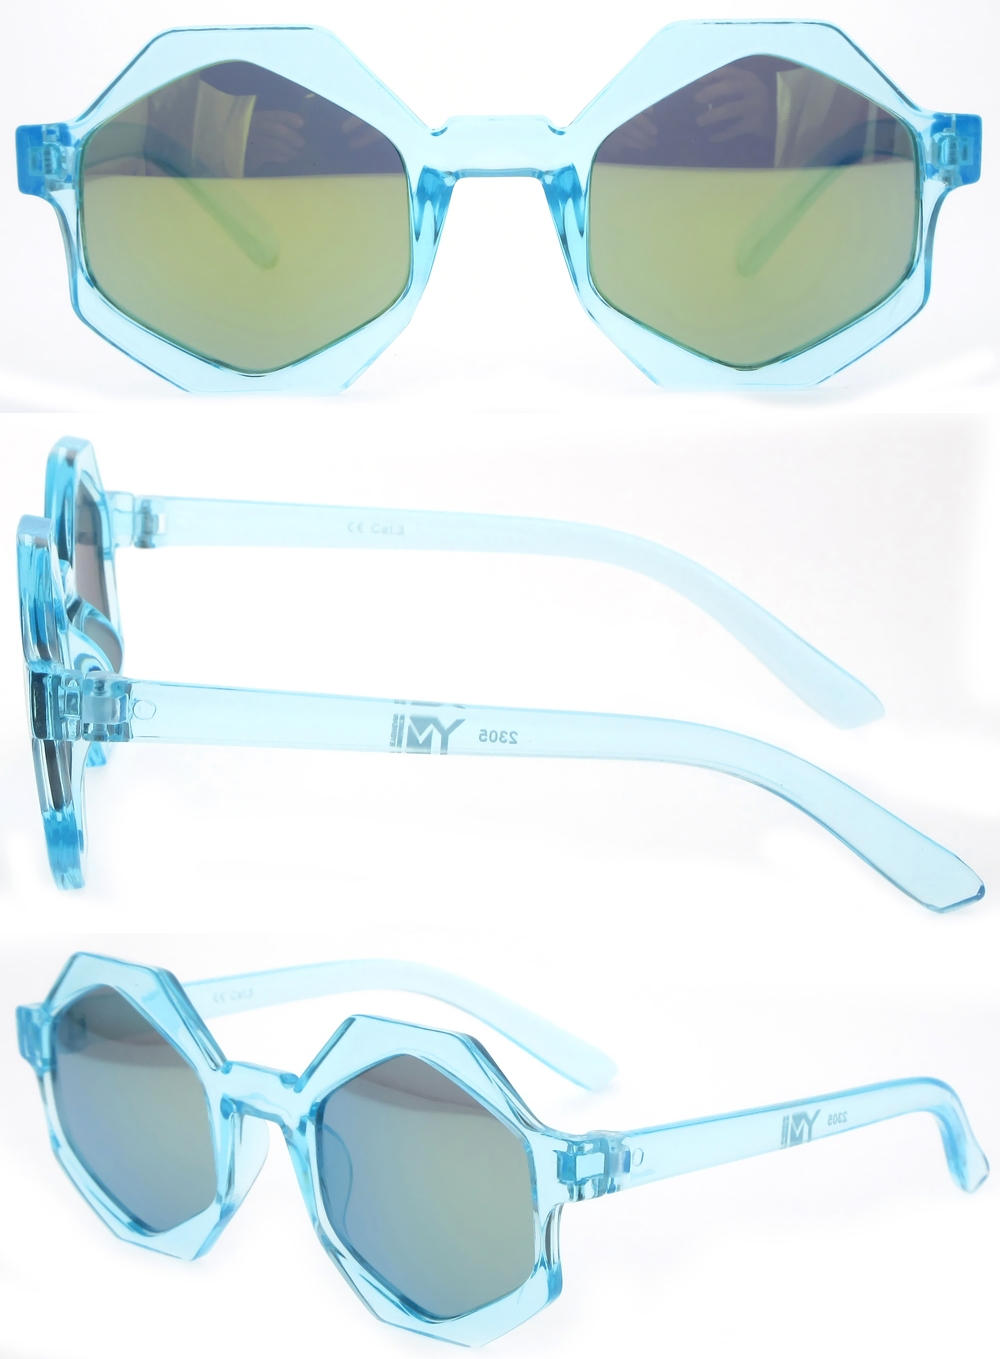 Dachuan Optical DSPK342028 China Manufacture Factory Retro Geometric Shape Kids Sunglasses with UV400 Protection (1)